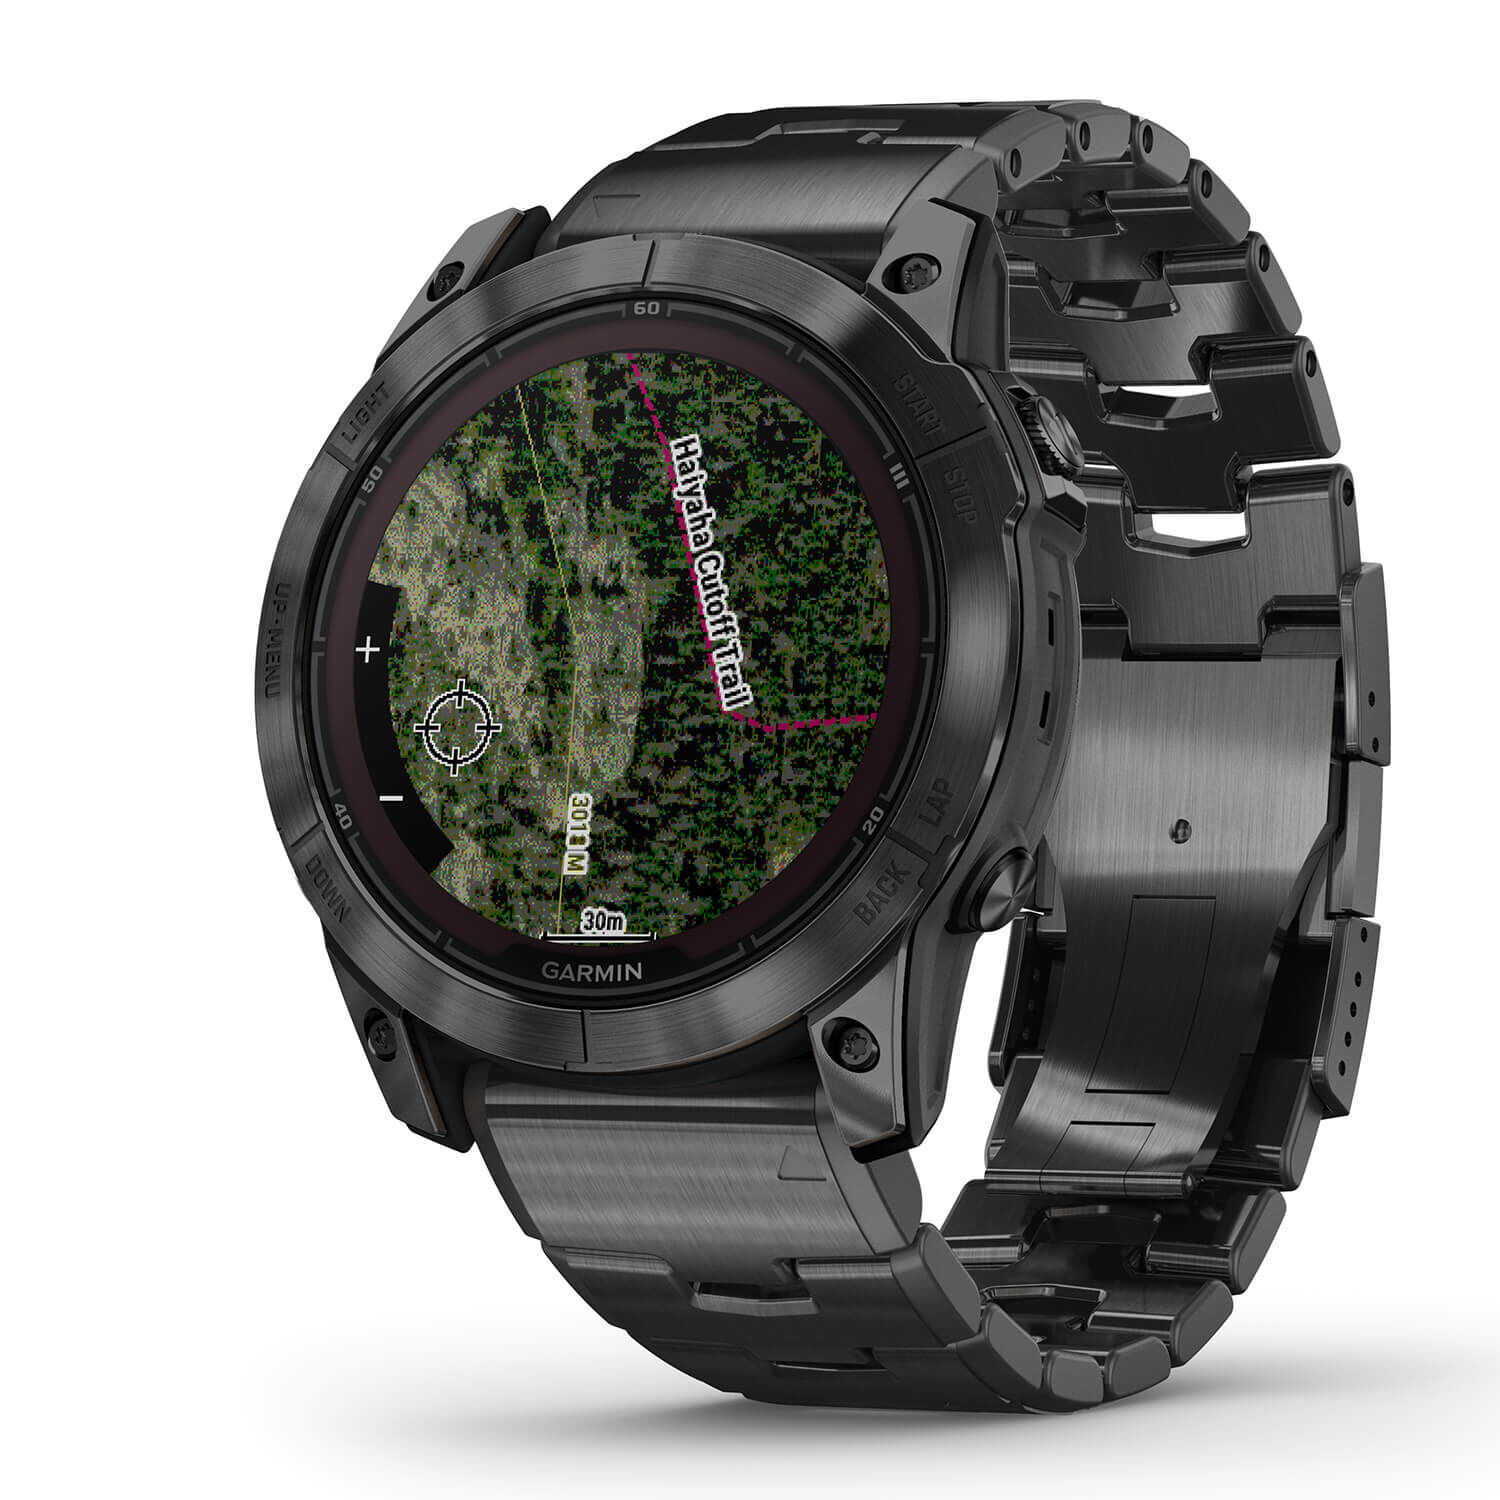 Garmin expands ECG App to four more watches in the US - GSMArena.com news